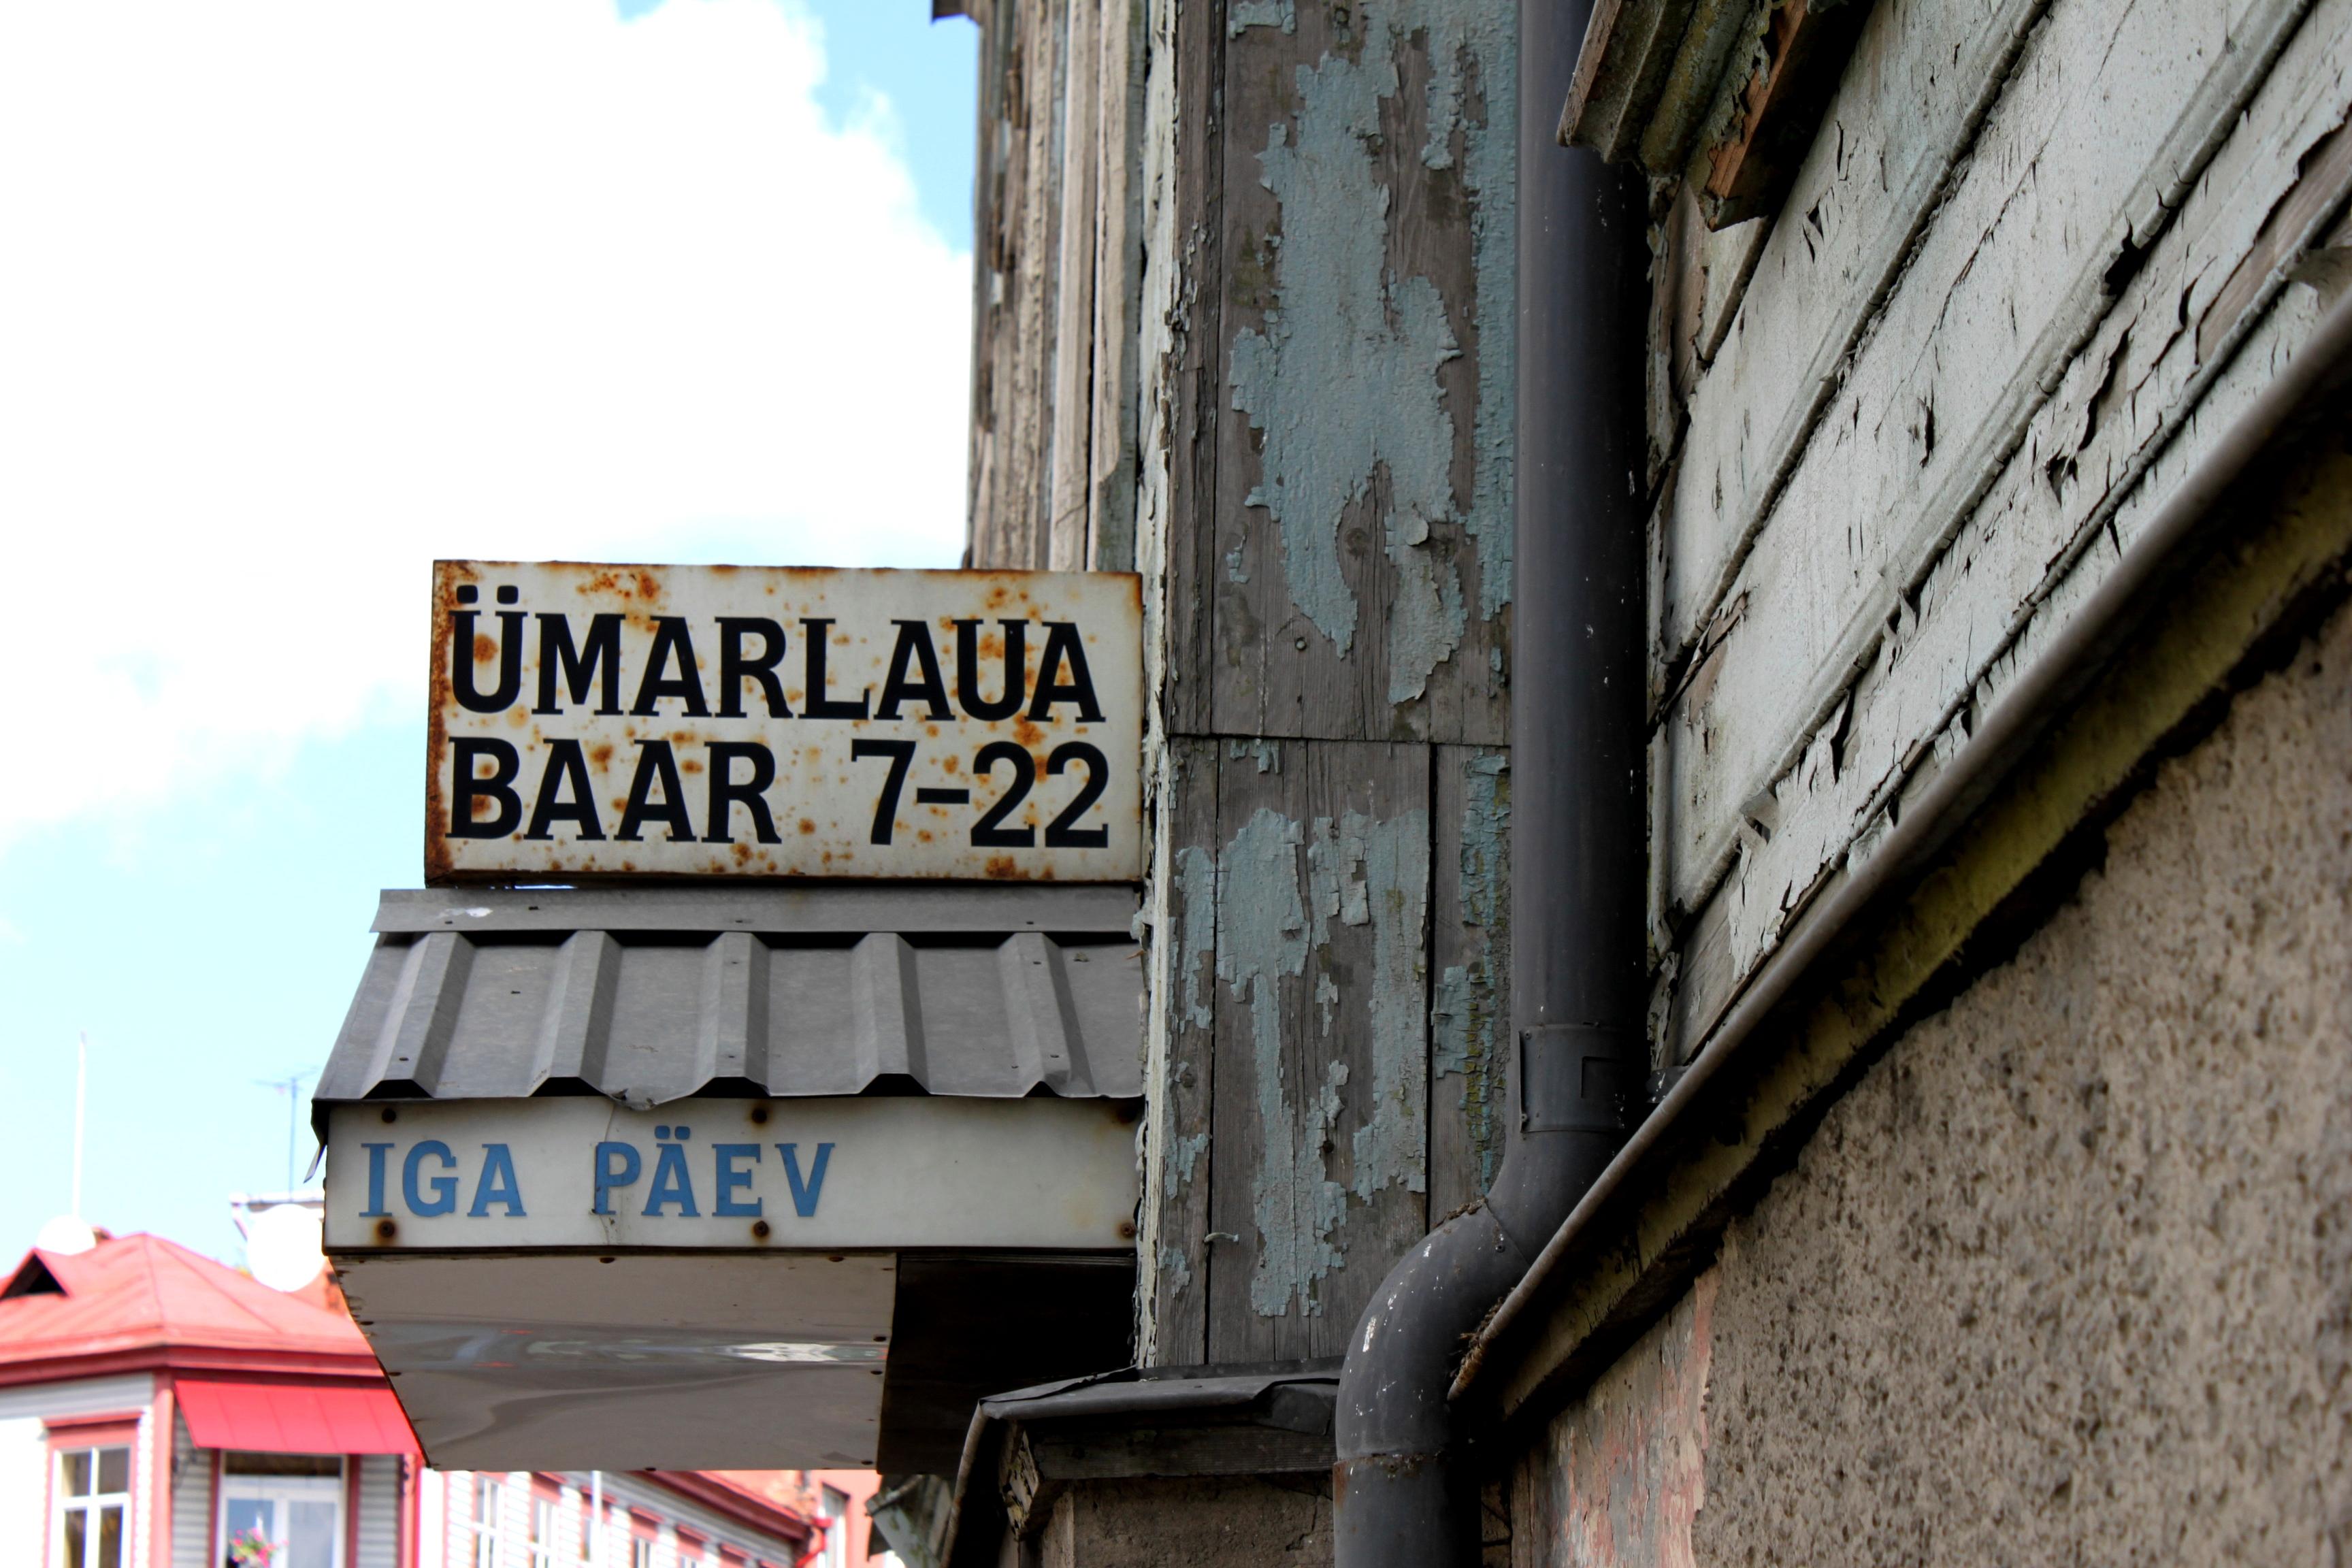 Cover image of this place Ümarlaua baar